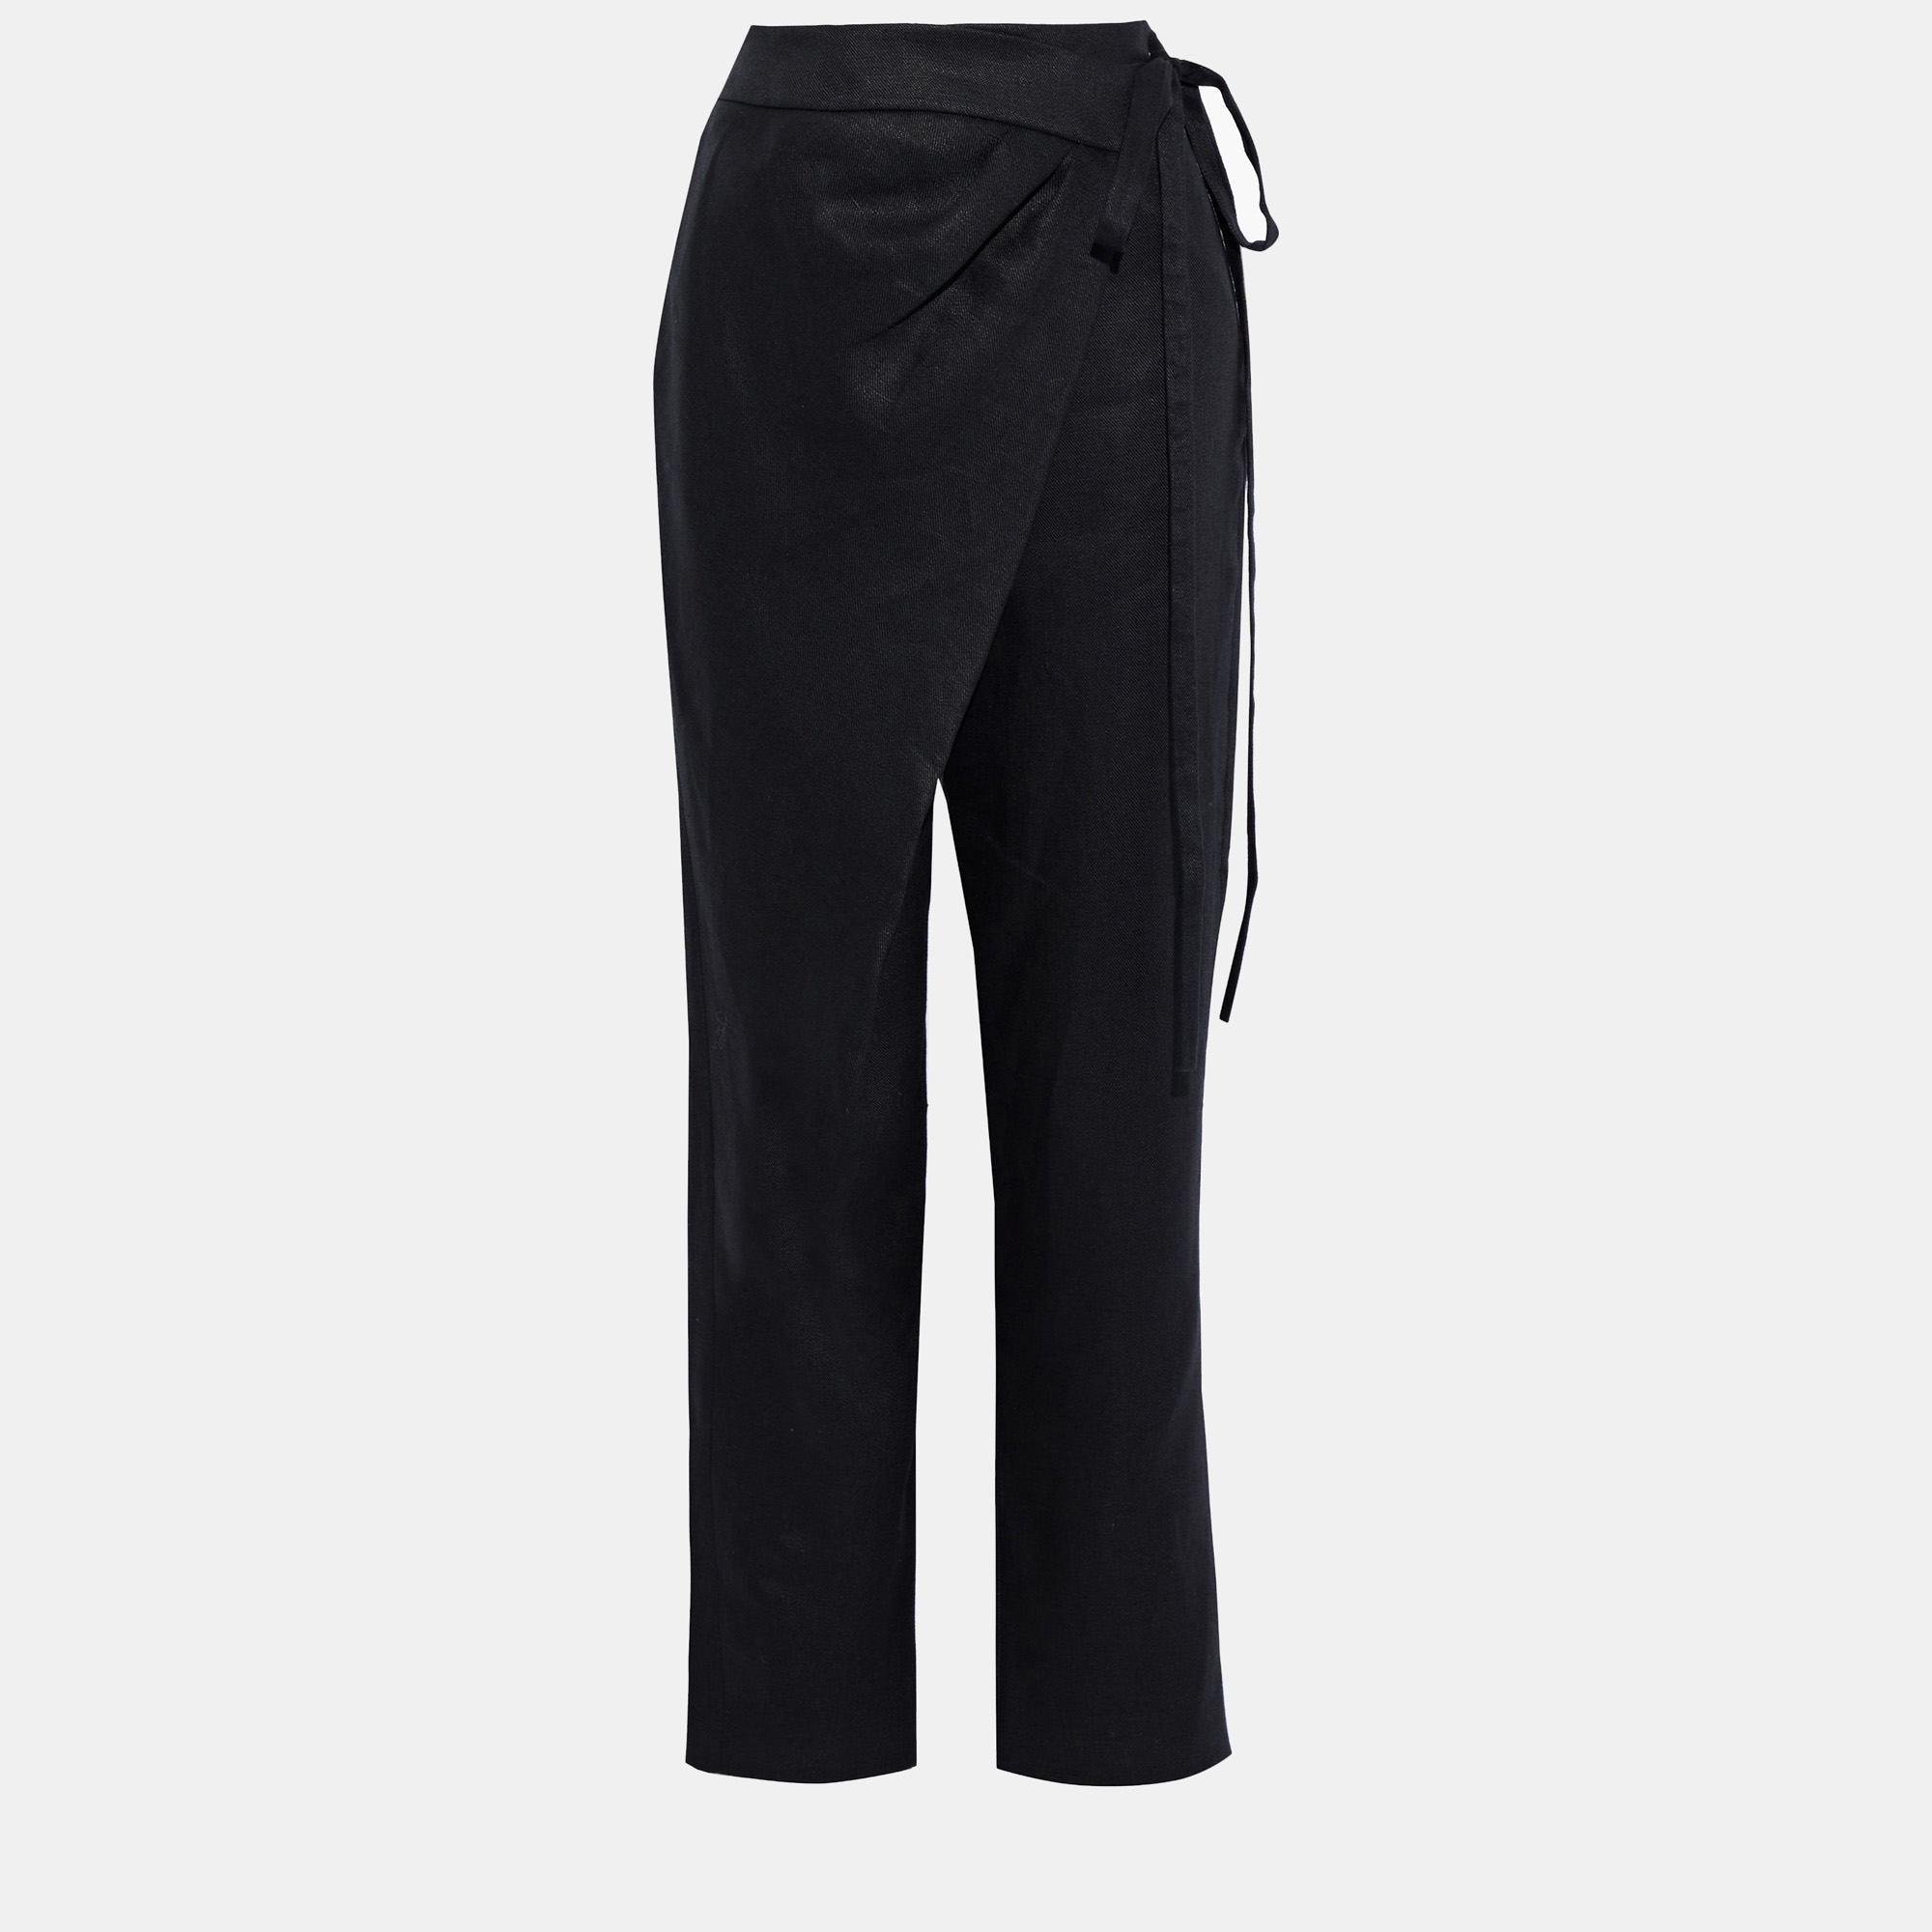 Oscar de la renta black linen trousers size m (6)